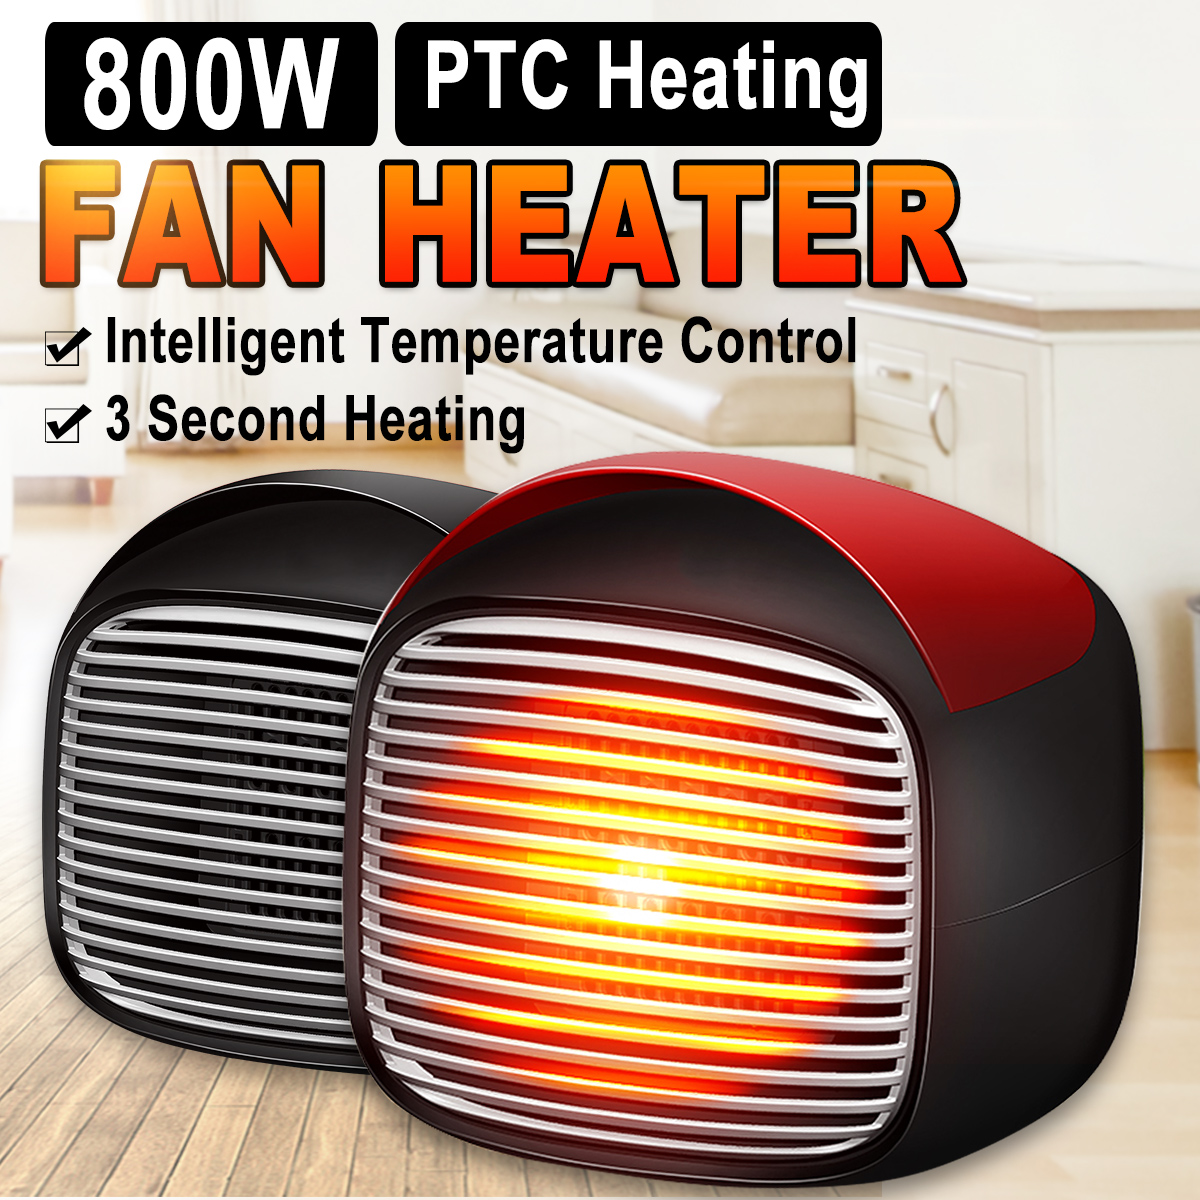 800W-Portable-Electric-Heater-Mini-Ceramic-Hot-Air-Heating-Fan-Winter-Home-Space-Warmer-1610147-2